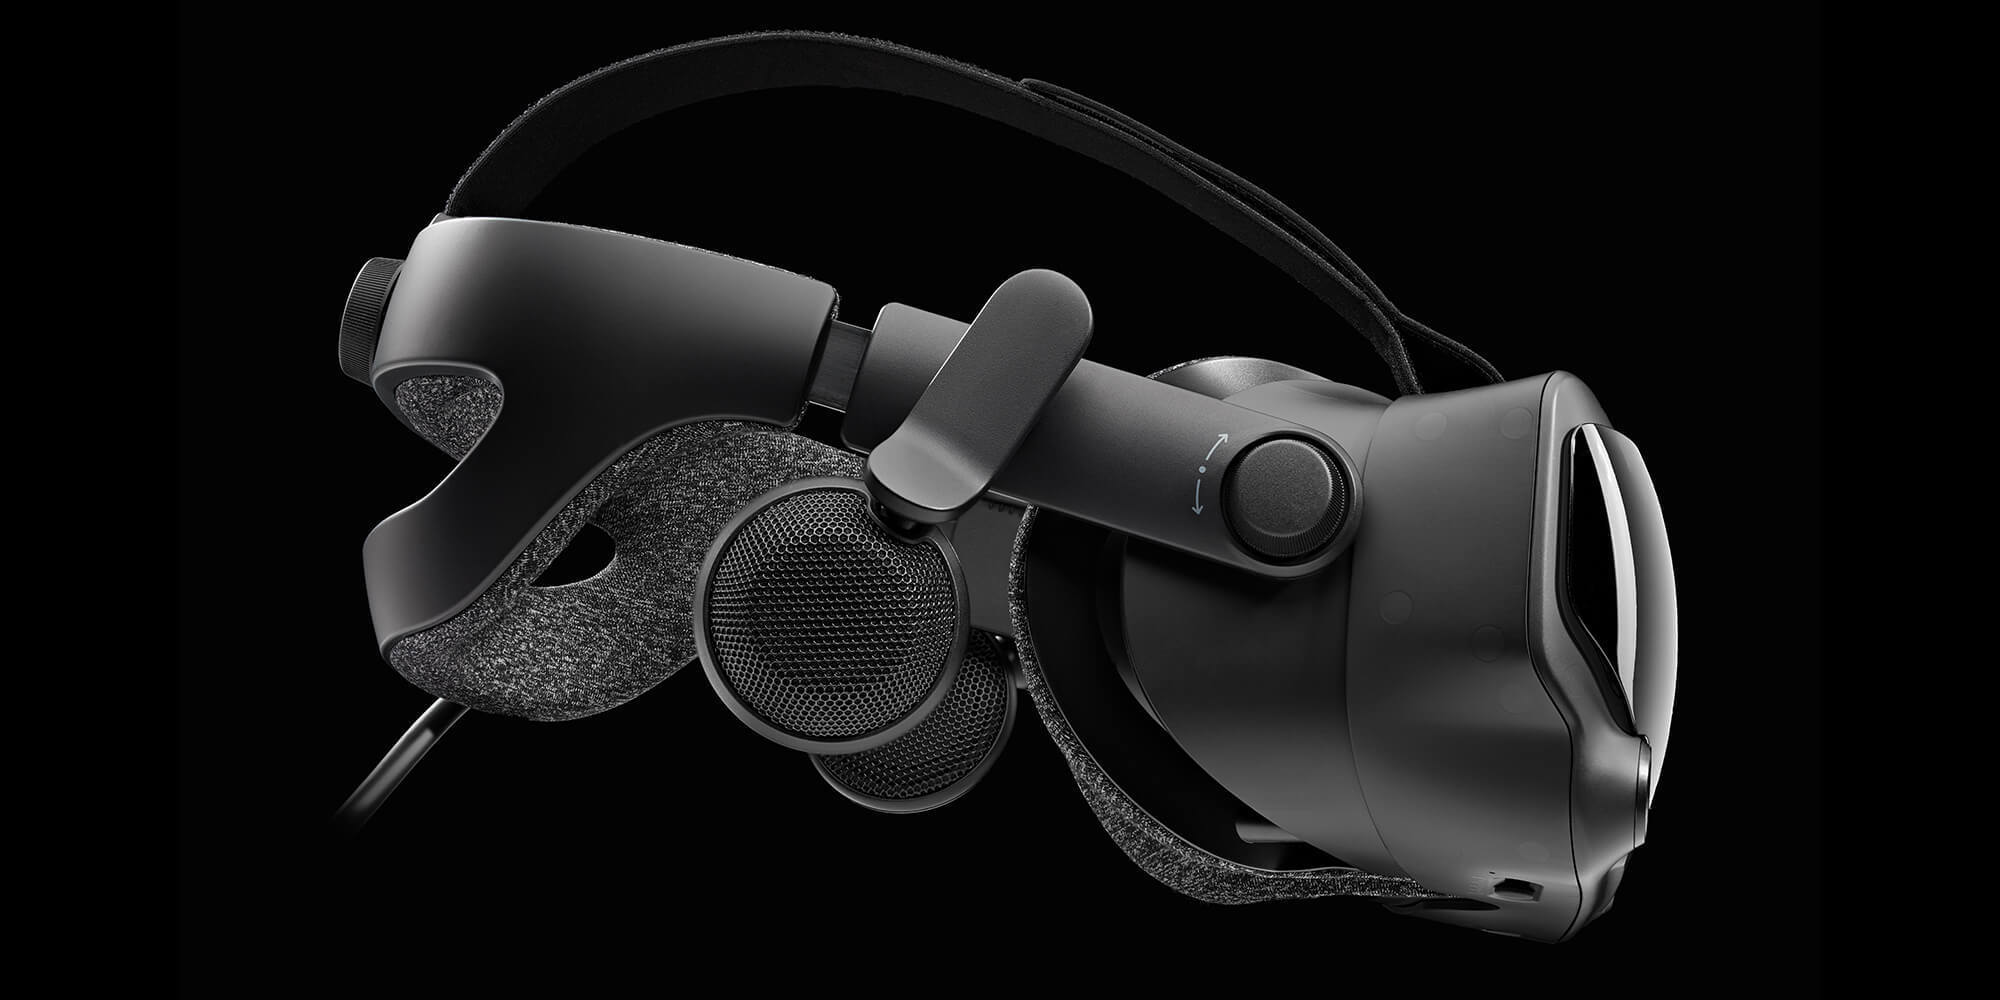 Valve's $999 Index VR headset promises 'high-fidelity virtual reality